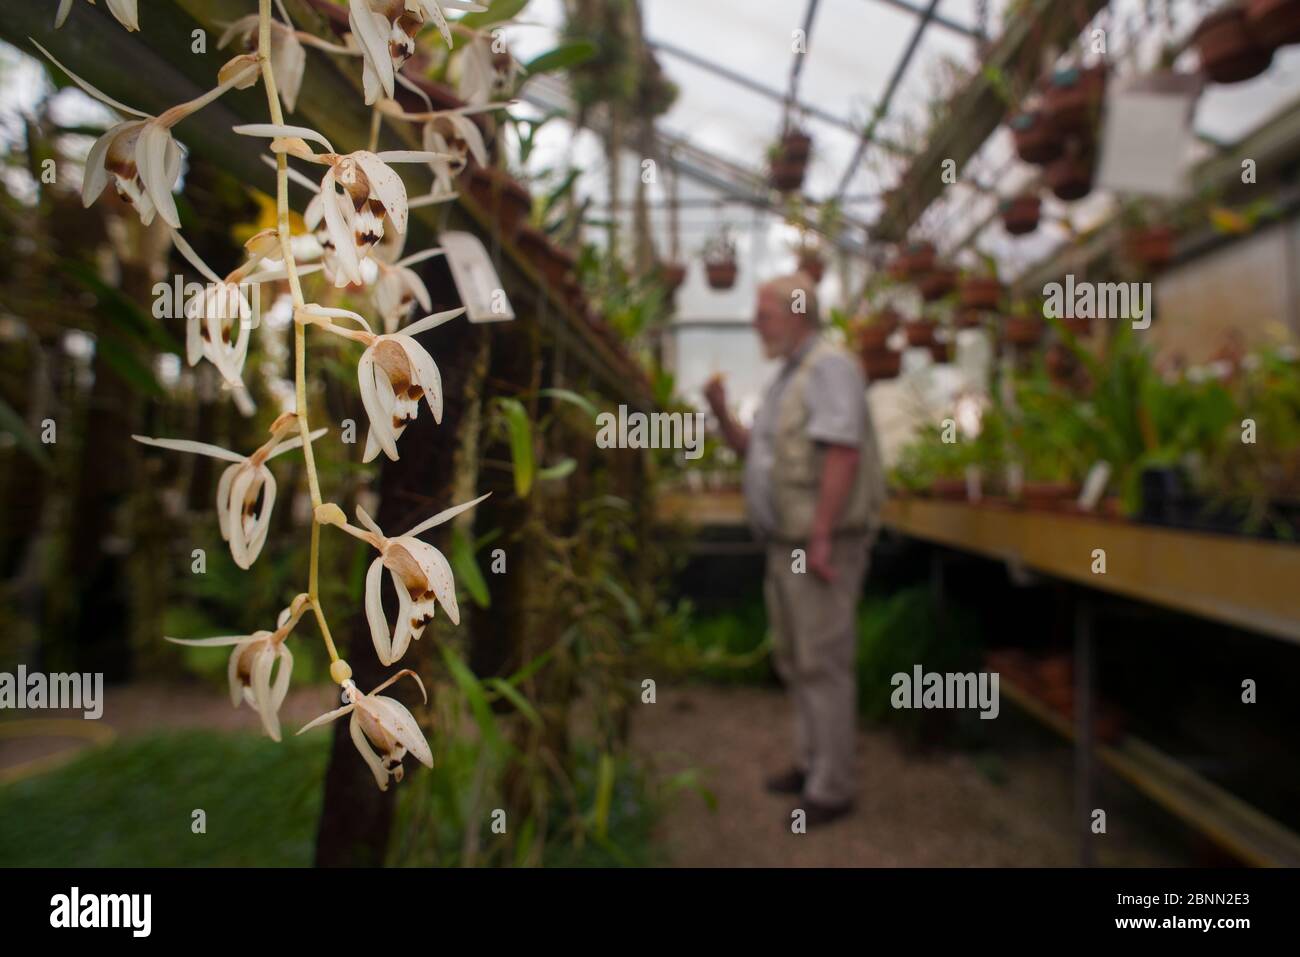 Orchid (Coelogyne swaniana) with botanist in the background, Botanic Garden Leiden, the Netherlands. September 2013. Stock Photo